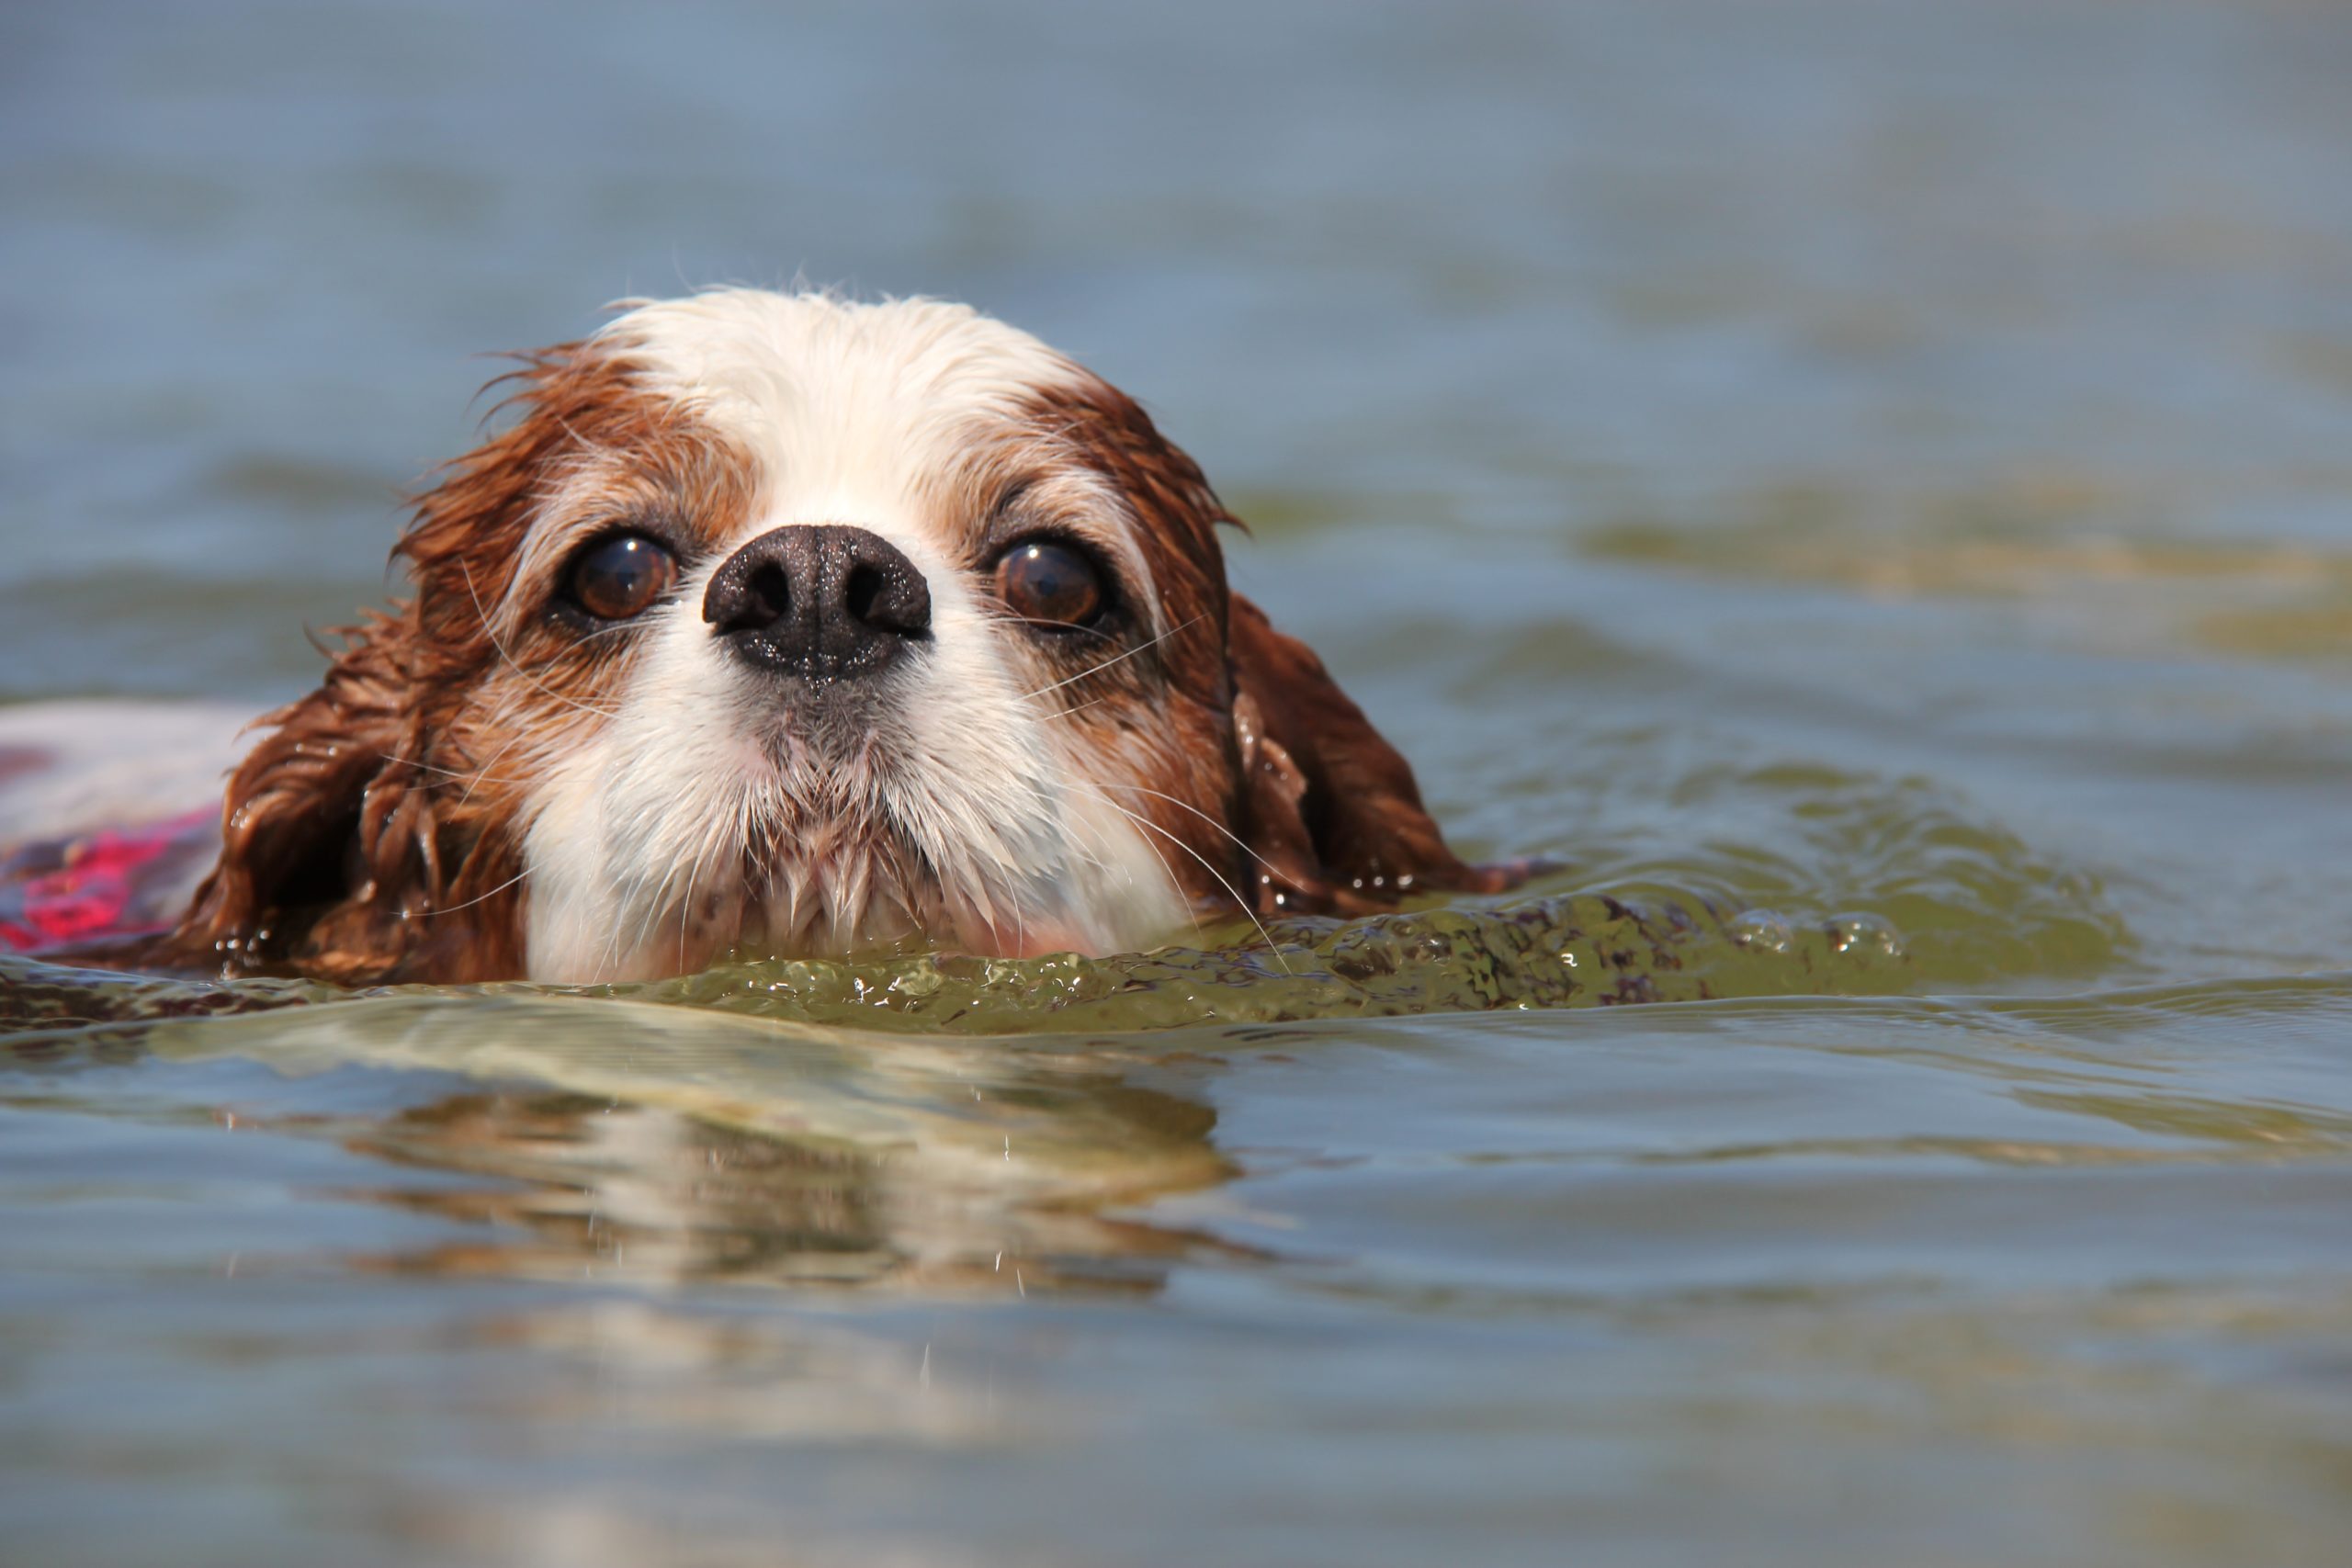 Merlin the dog swimming